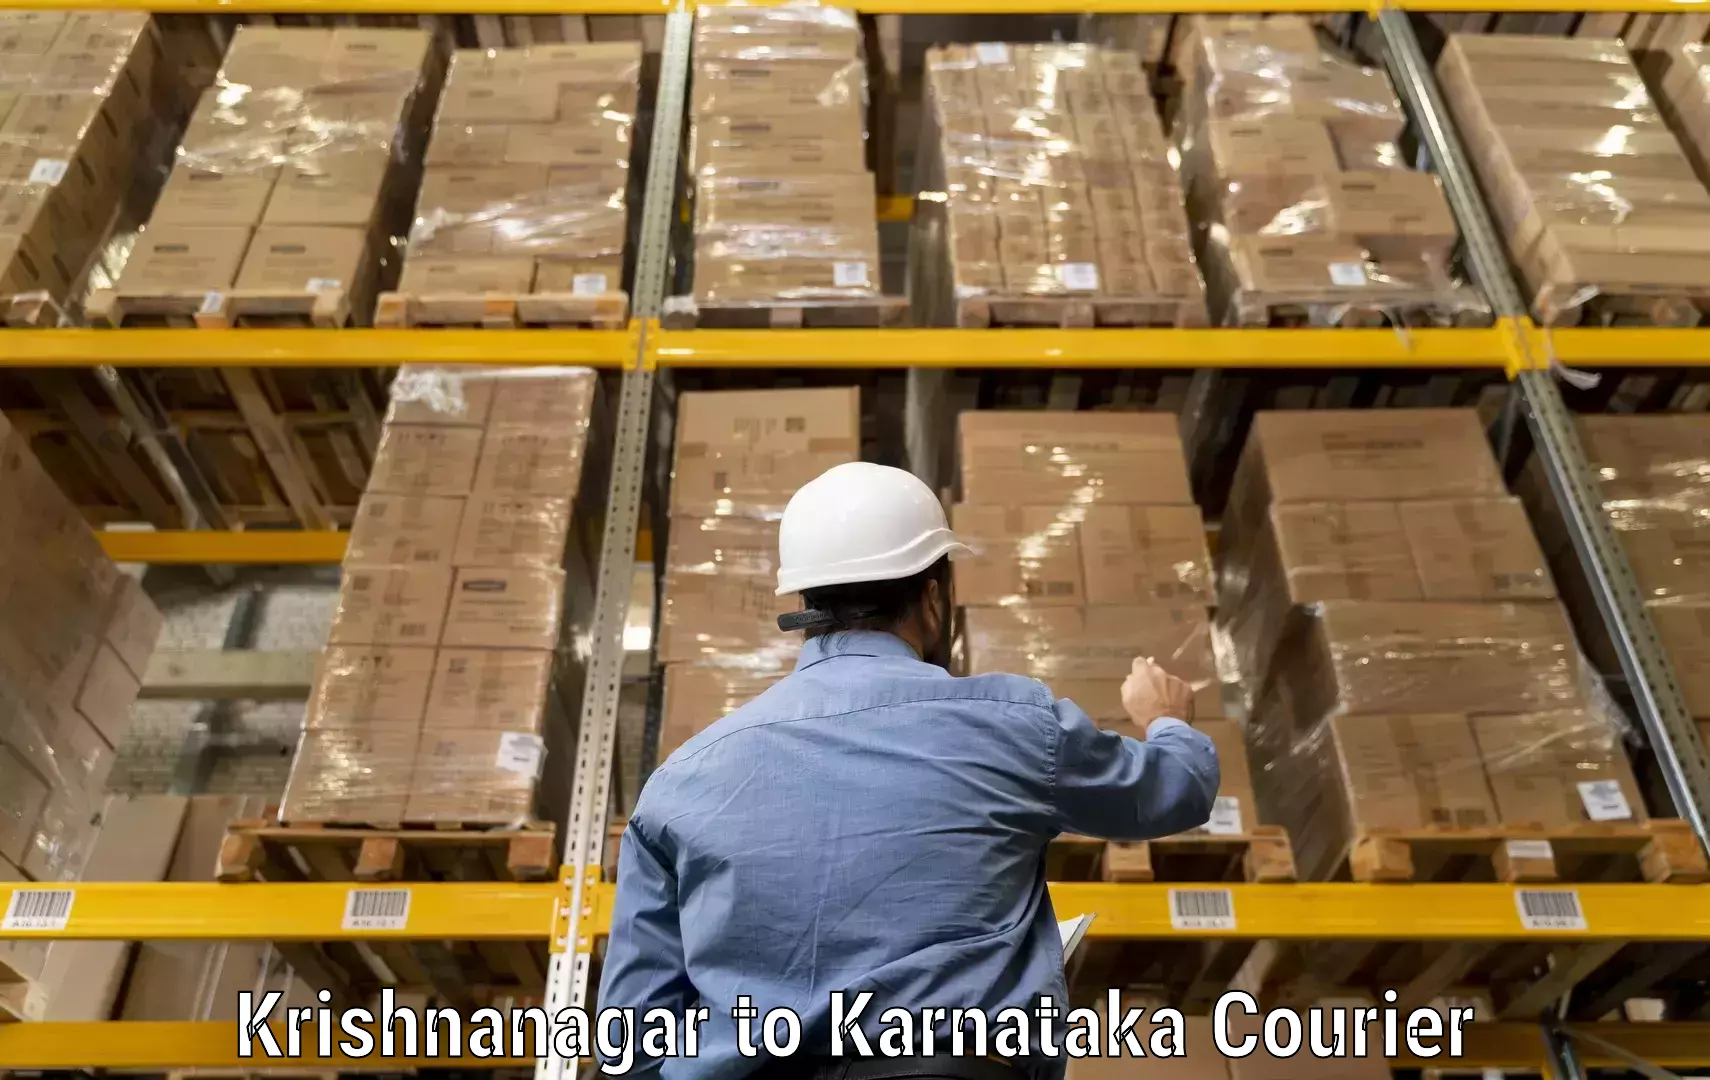 Next-day delivery options Krishnanagar to Kanjarakatte